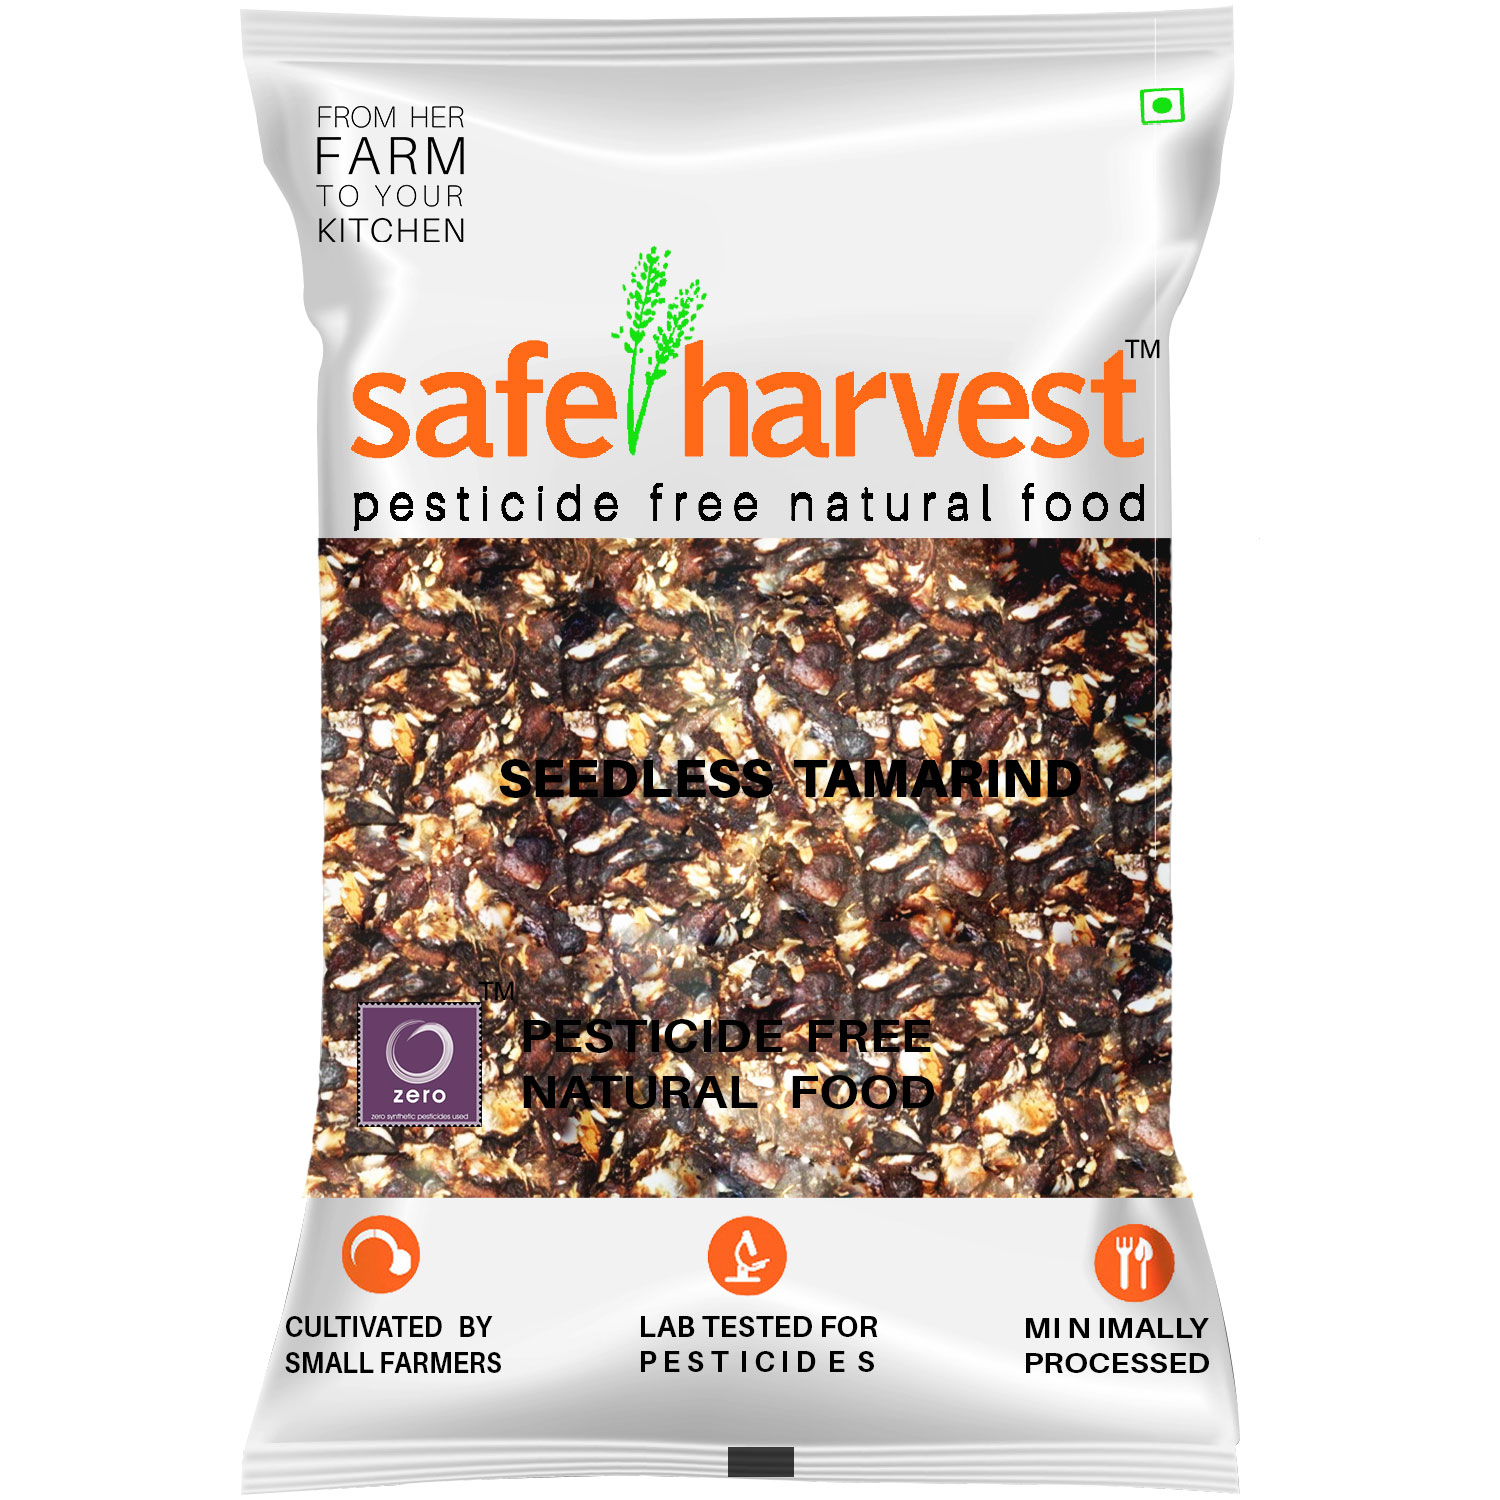 Safe Harvest seedless Tamarind